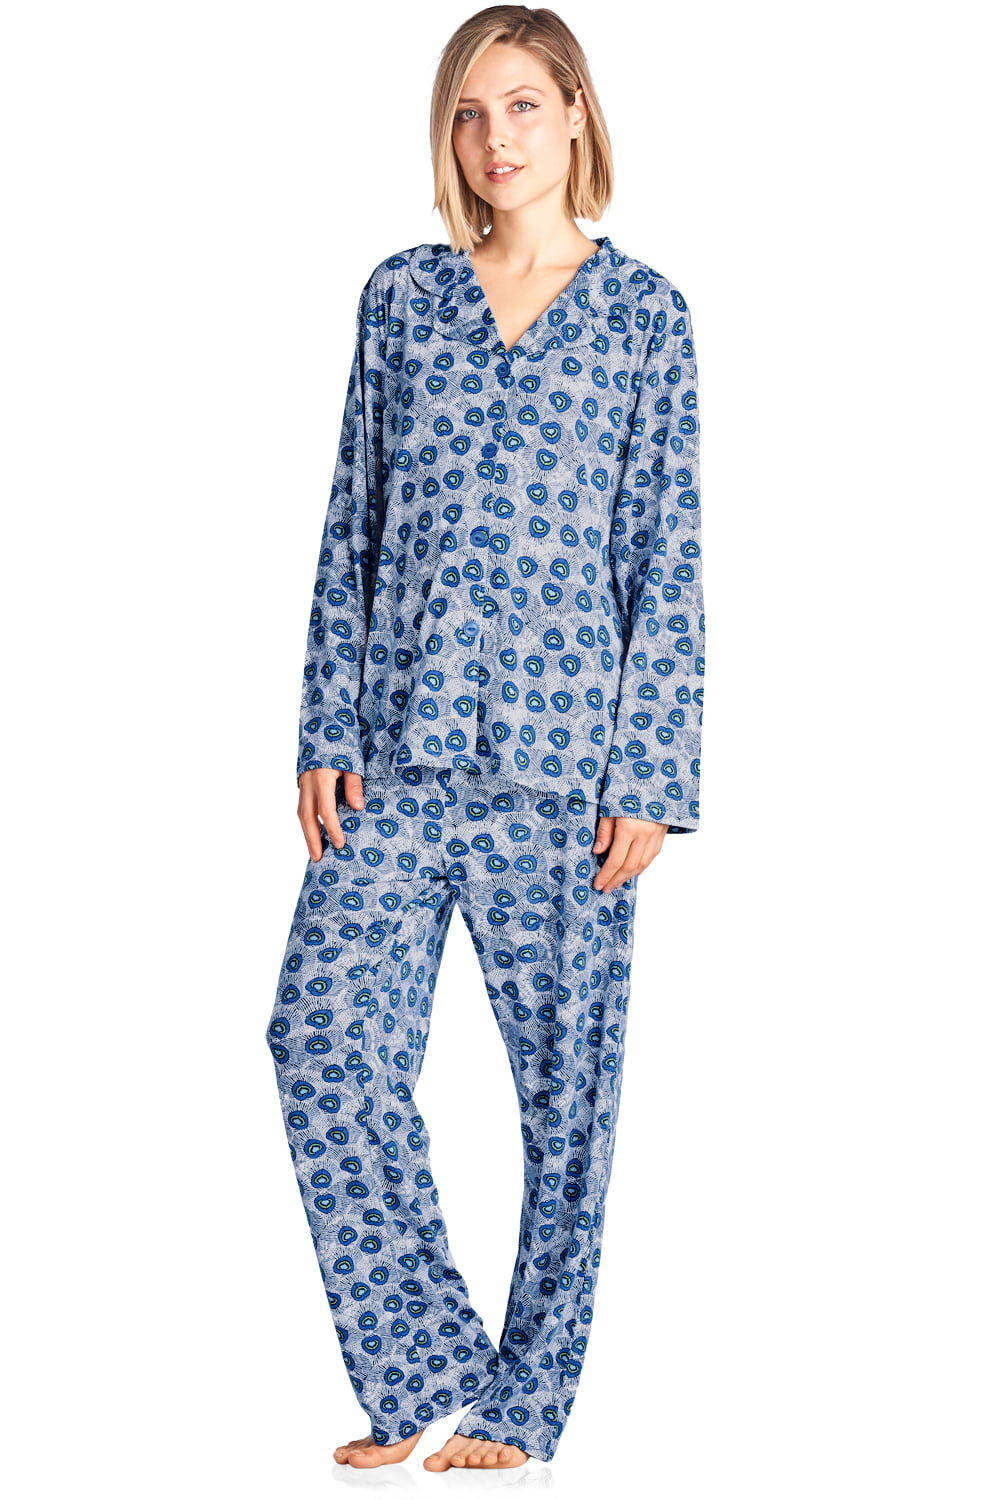 BedHead Pajamas - BHPJ By Bedhead Pajamas Women's Soft Knit long Sleeve ...